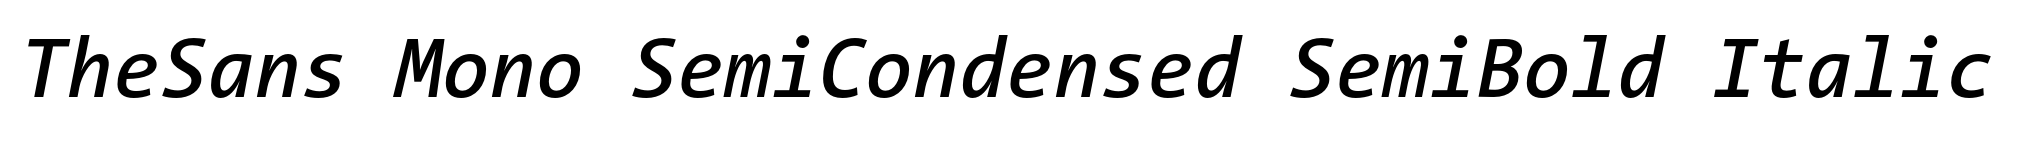 TheSans Mono SemiCondensed SemiBold Italic image